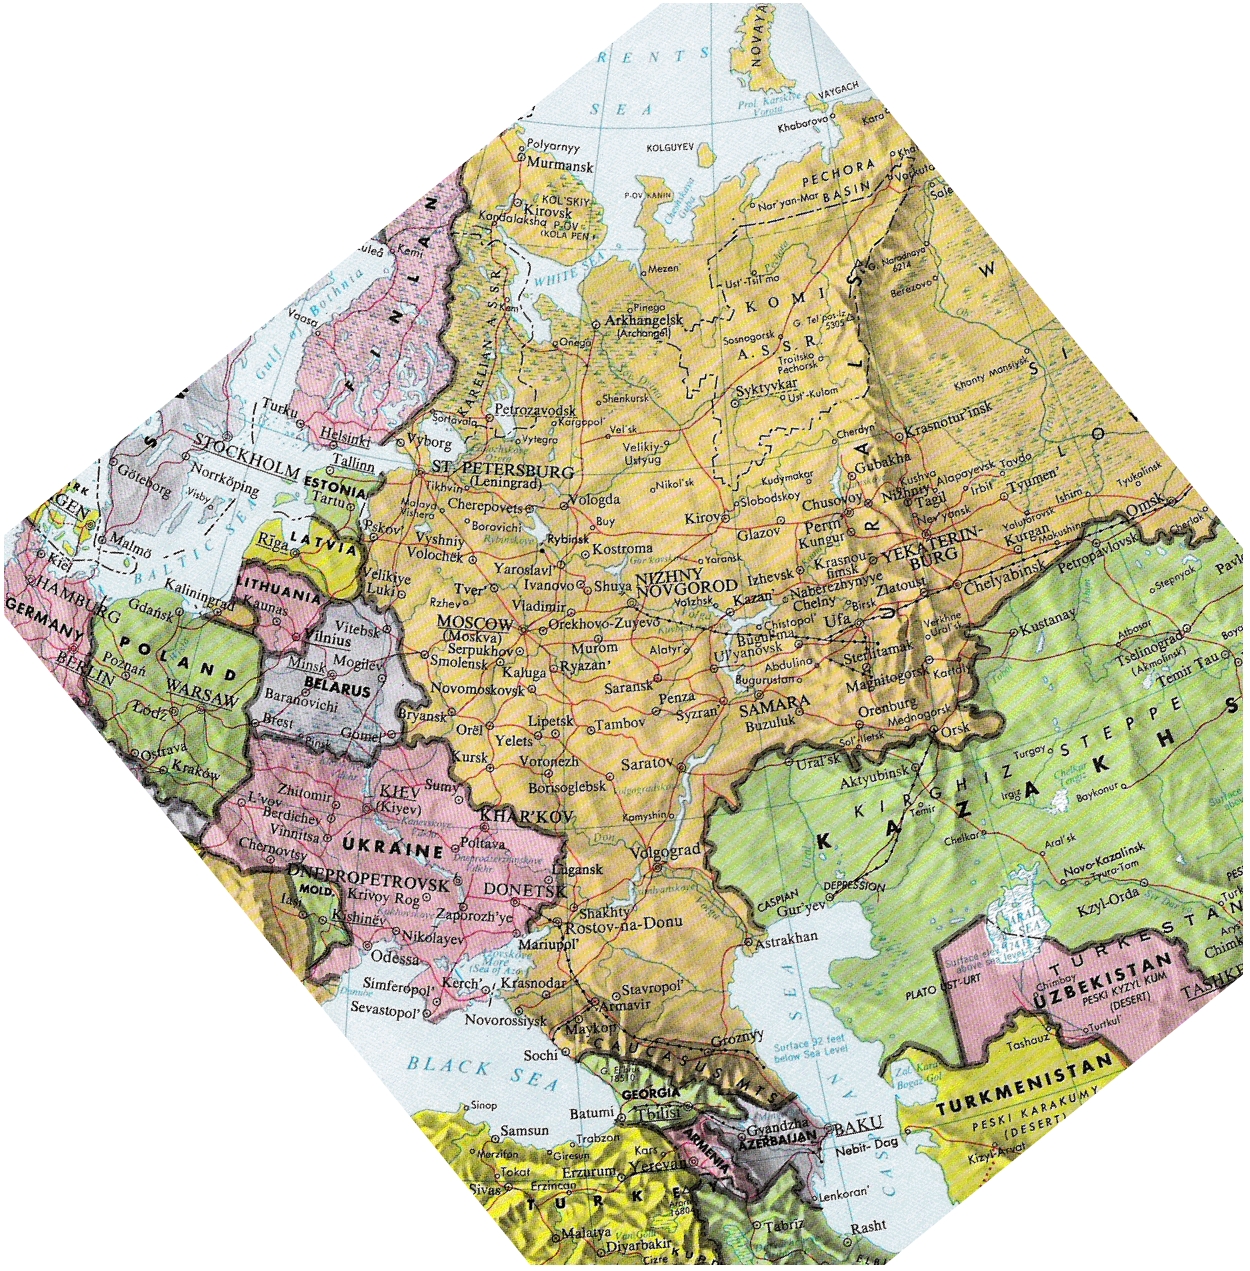 mapRussiaEuropeanRealm